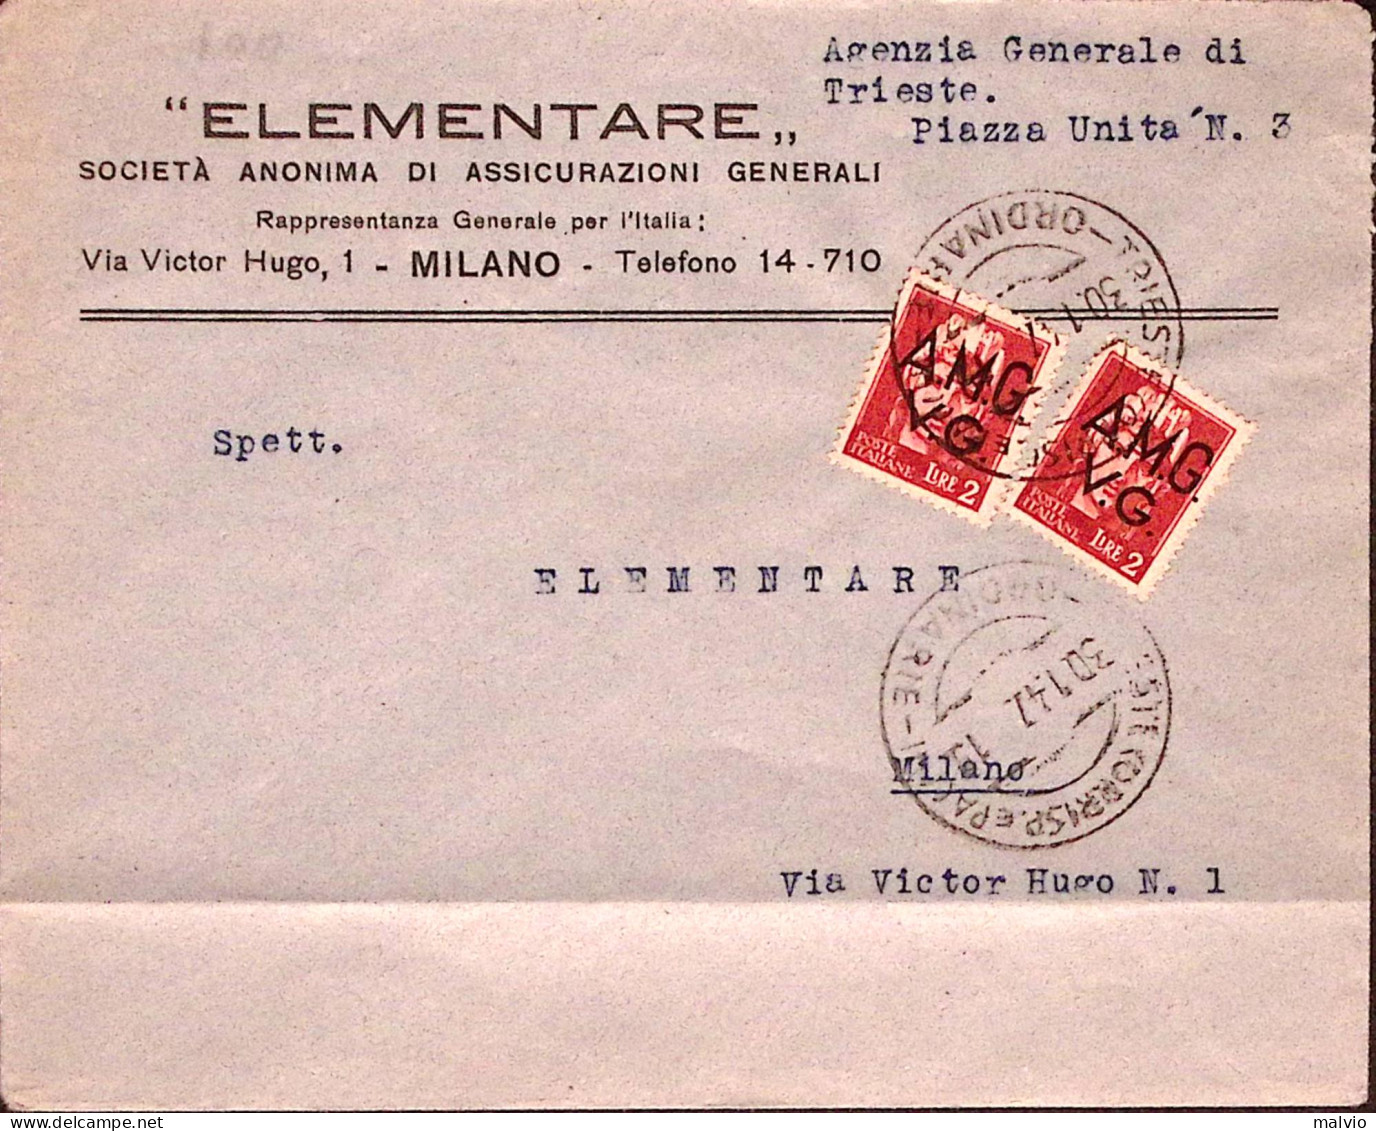 1947 A.M.G.V.G. IMPERIALE Soprast Due Lire 2 Su Busta Trieste (30.1) - Poststempel